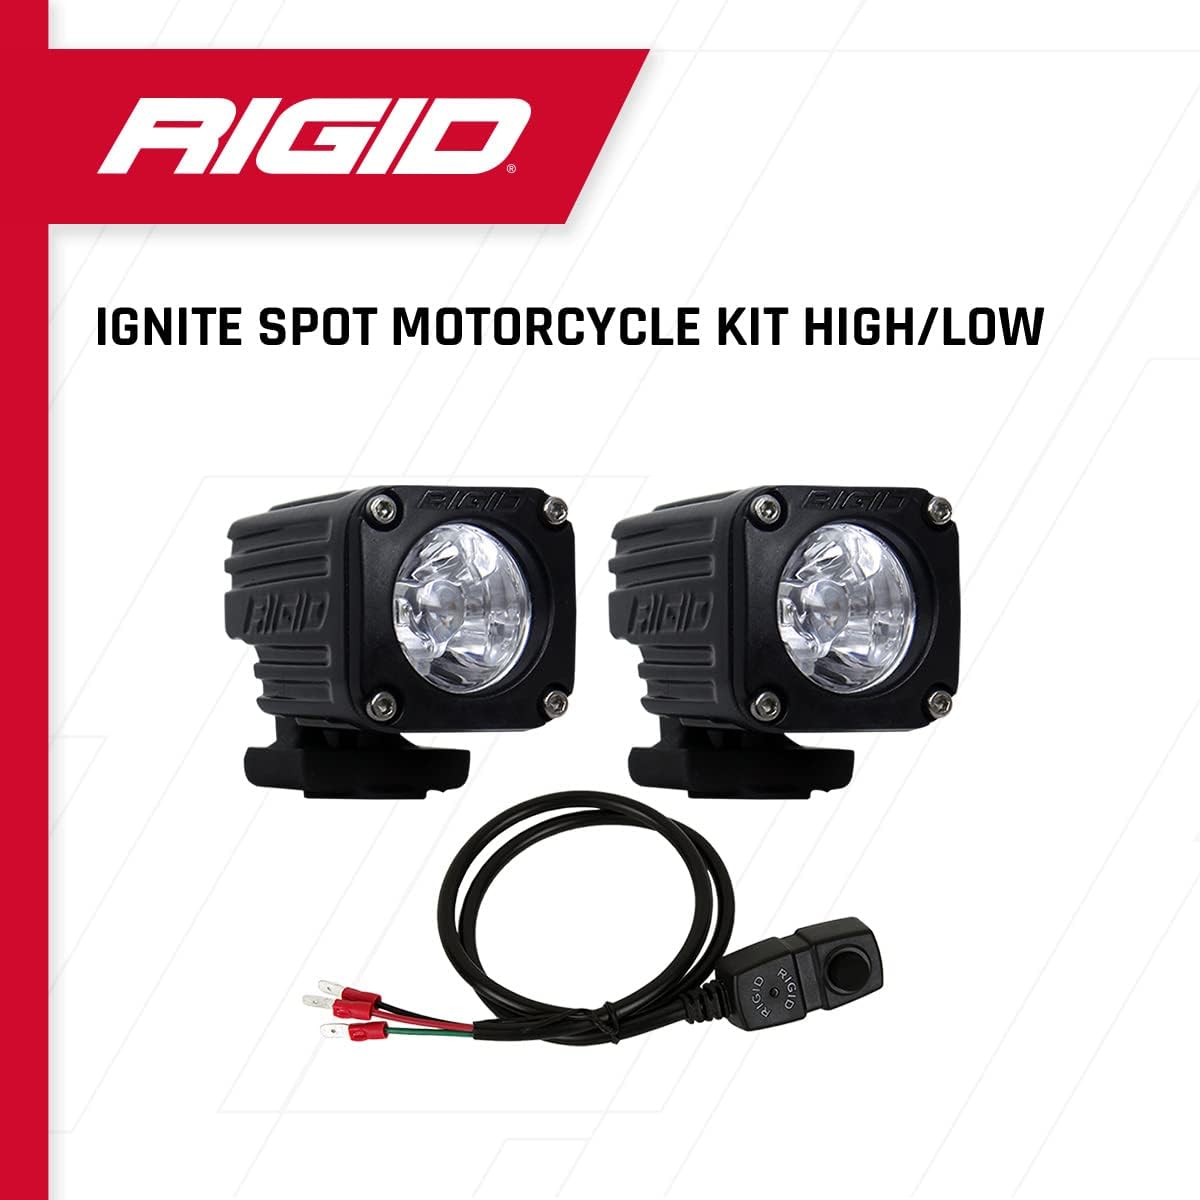 Ignite Spot Motorcycle Kit High/Low